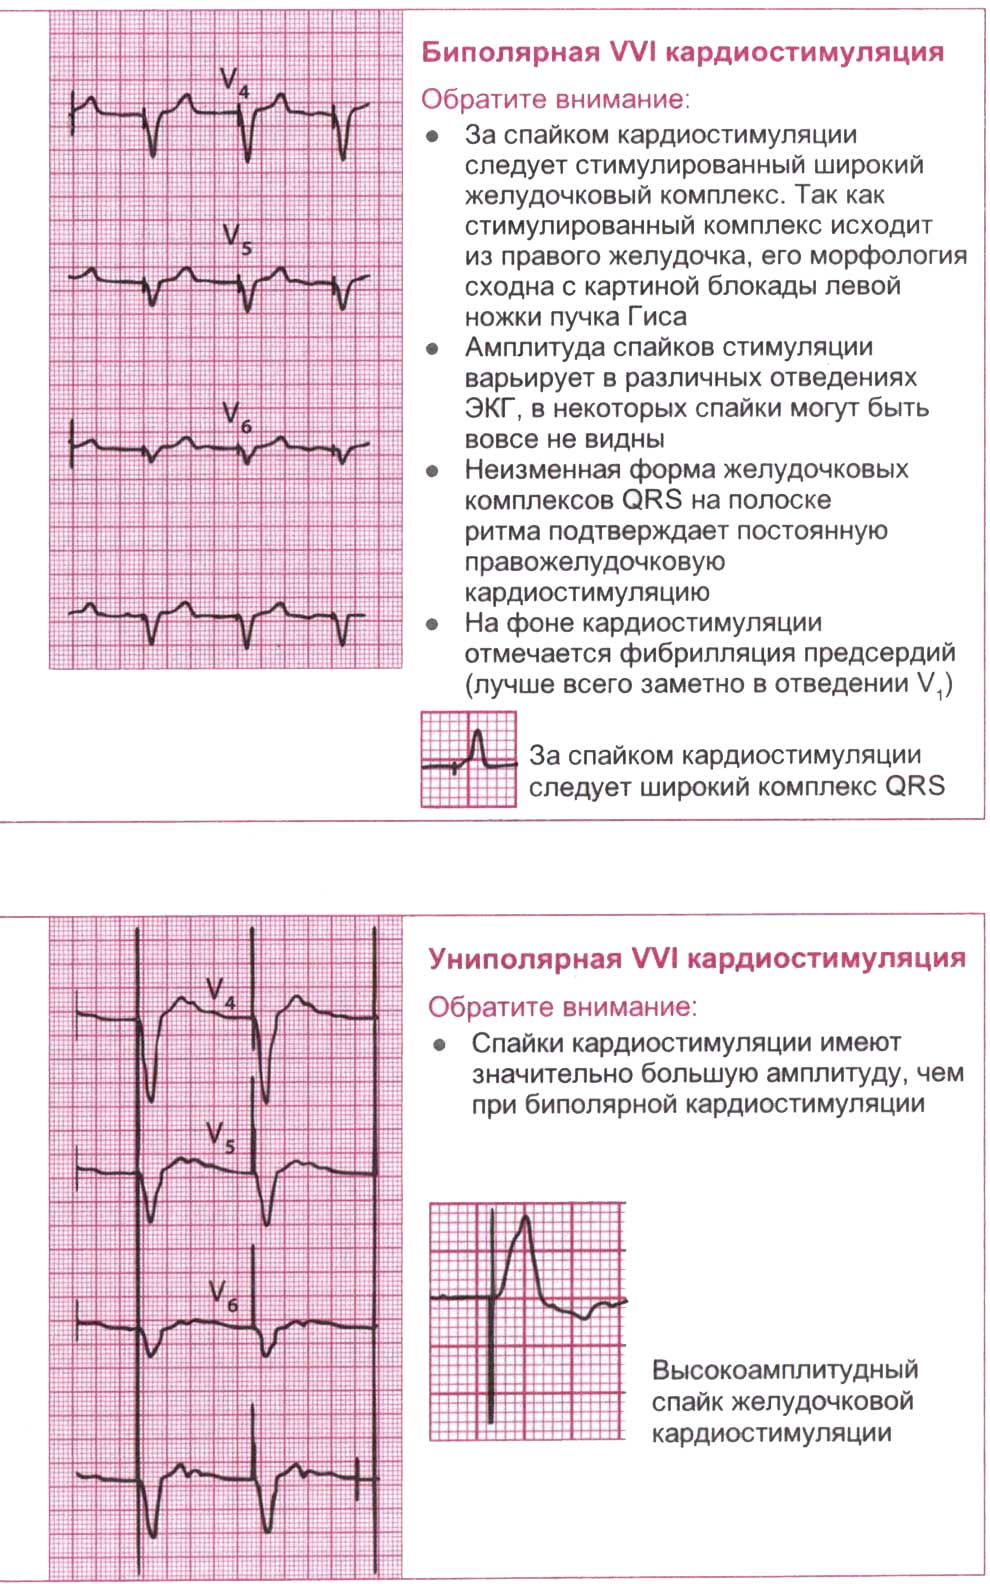 Униполярная VVI кардиостимуляция